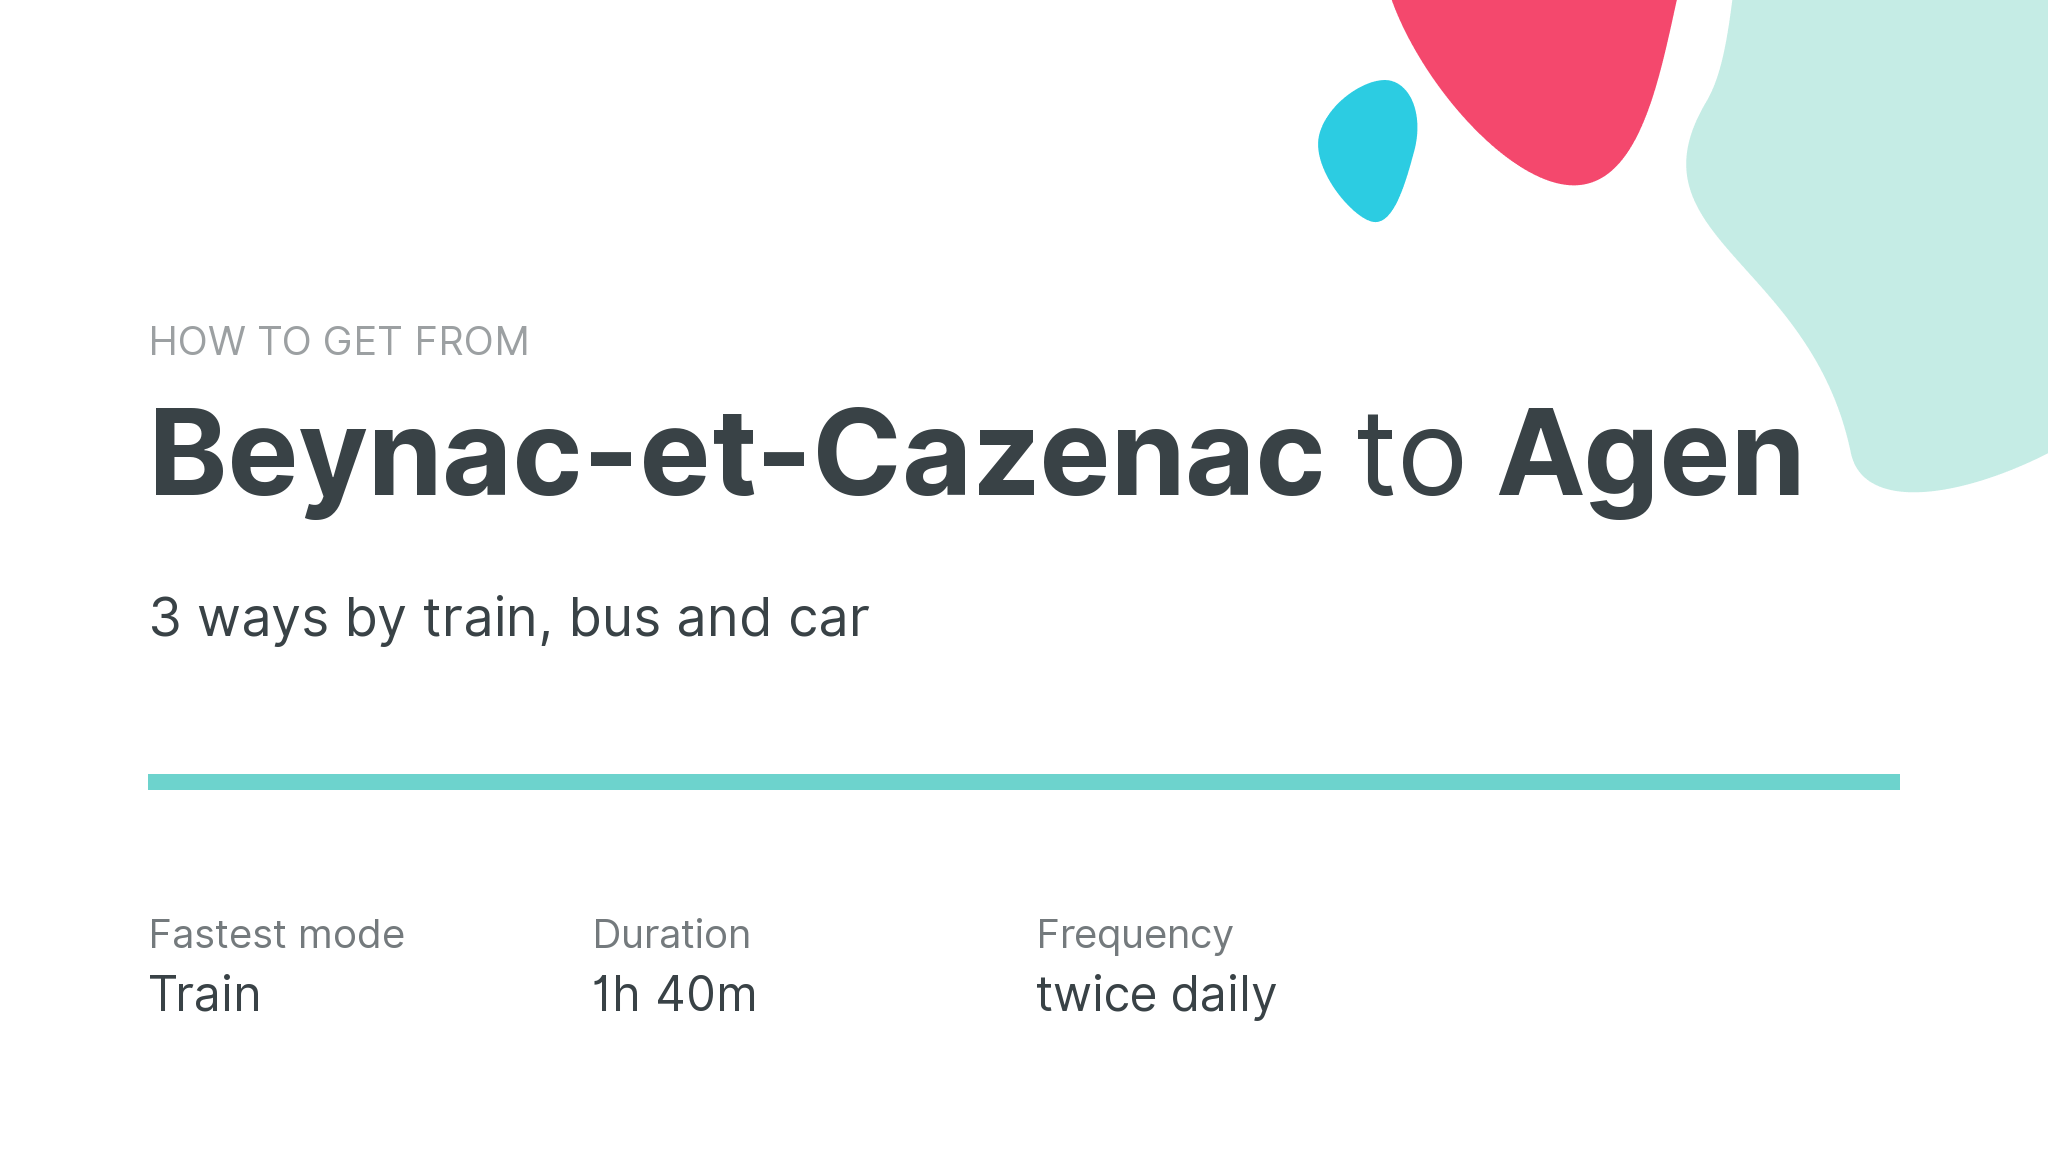 How do I get from Beynac-et-Cazenac to Agen